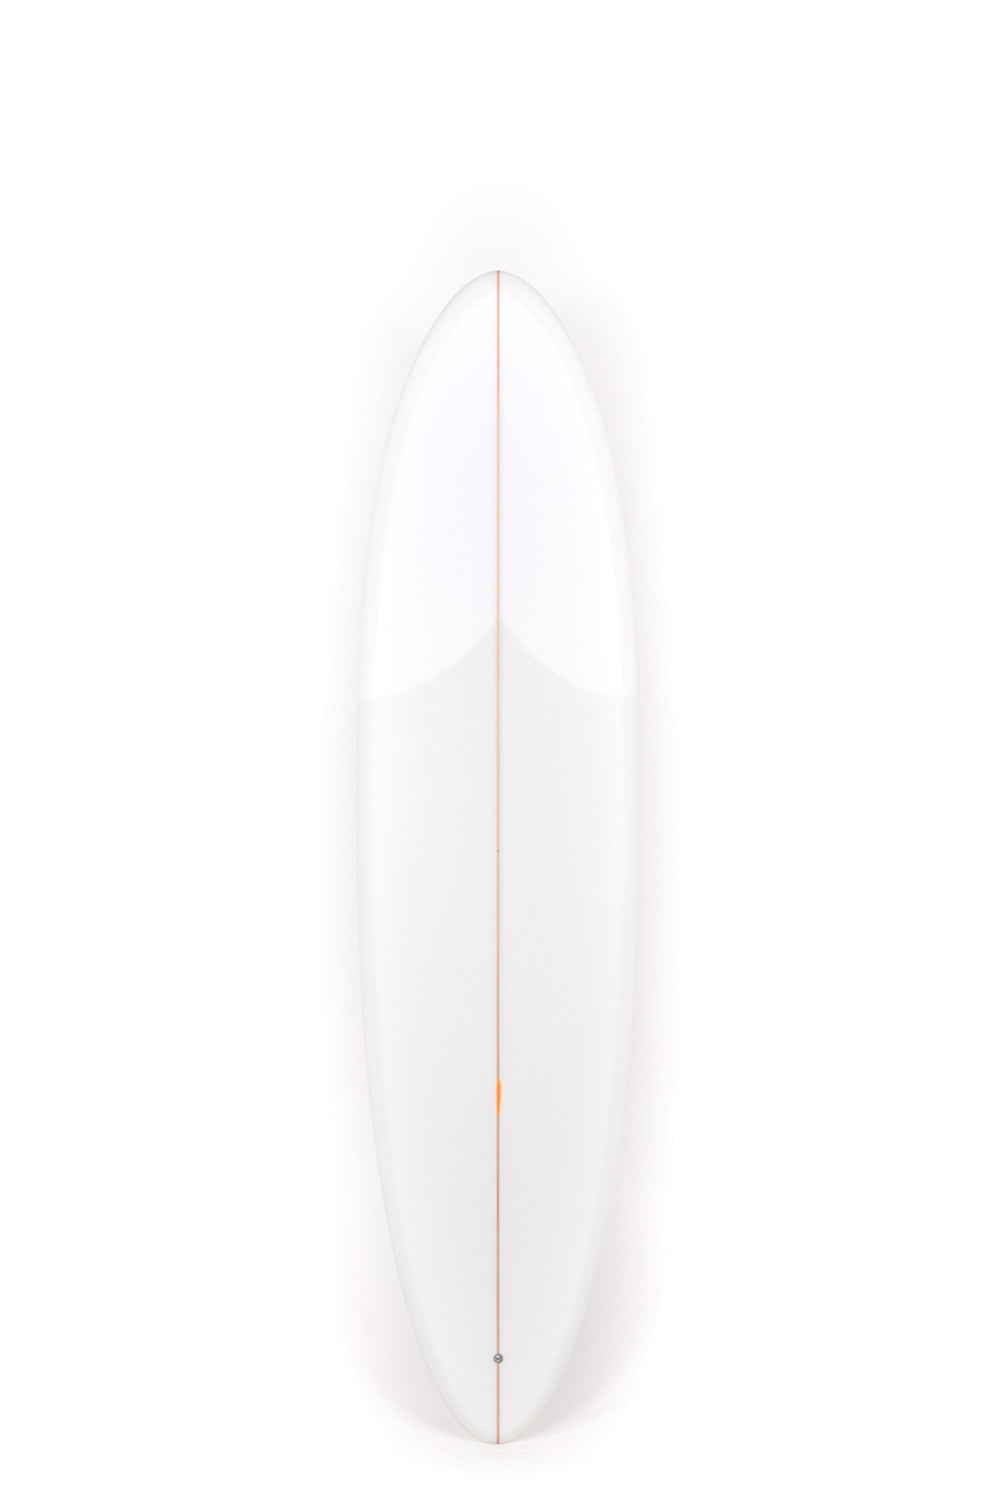 Pukas Surf Shop - Christenson Surfboards - HUNTSMAN - 7'4